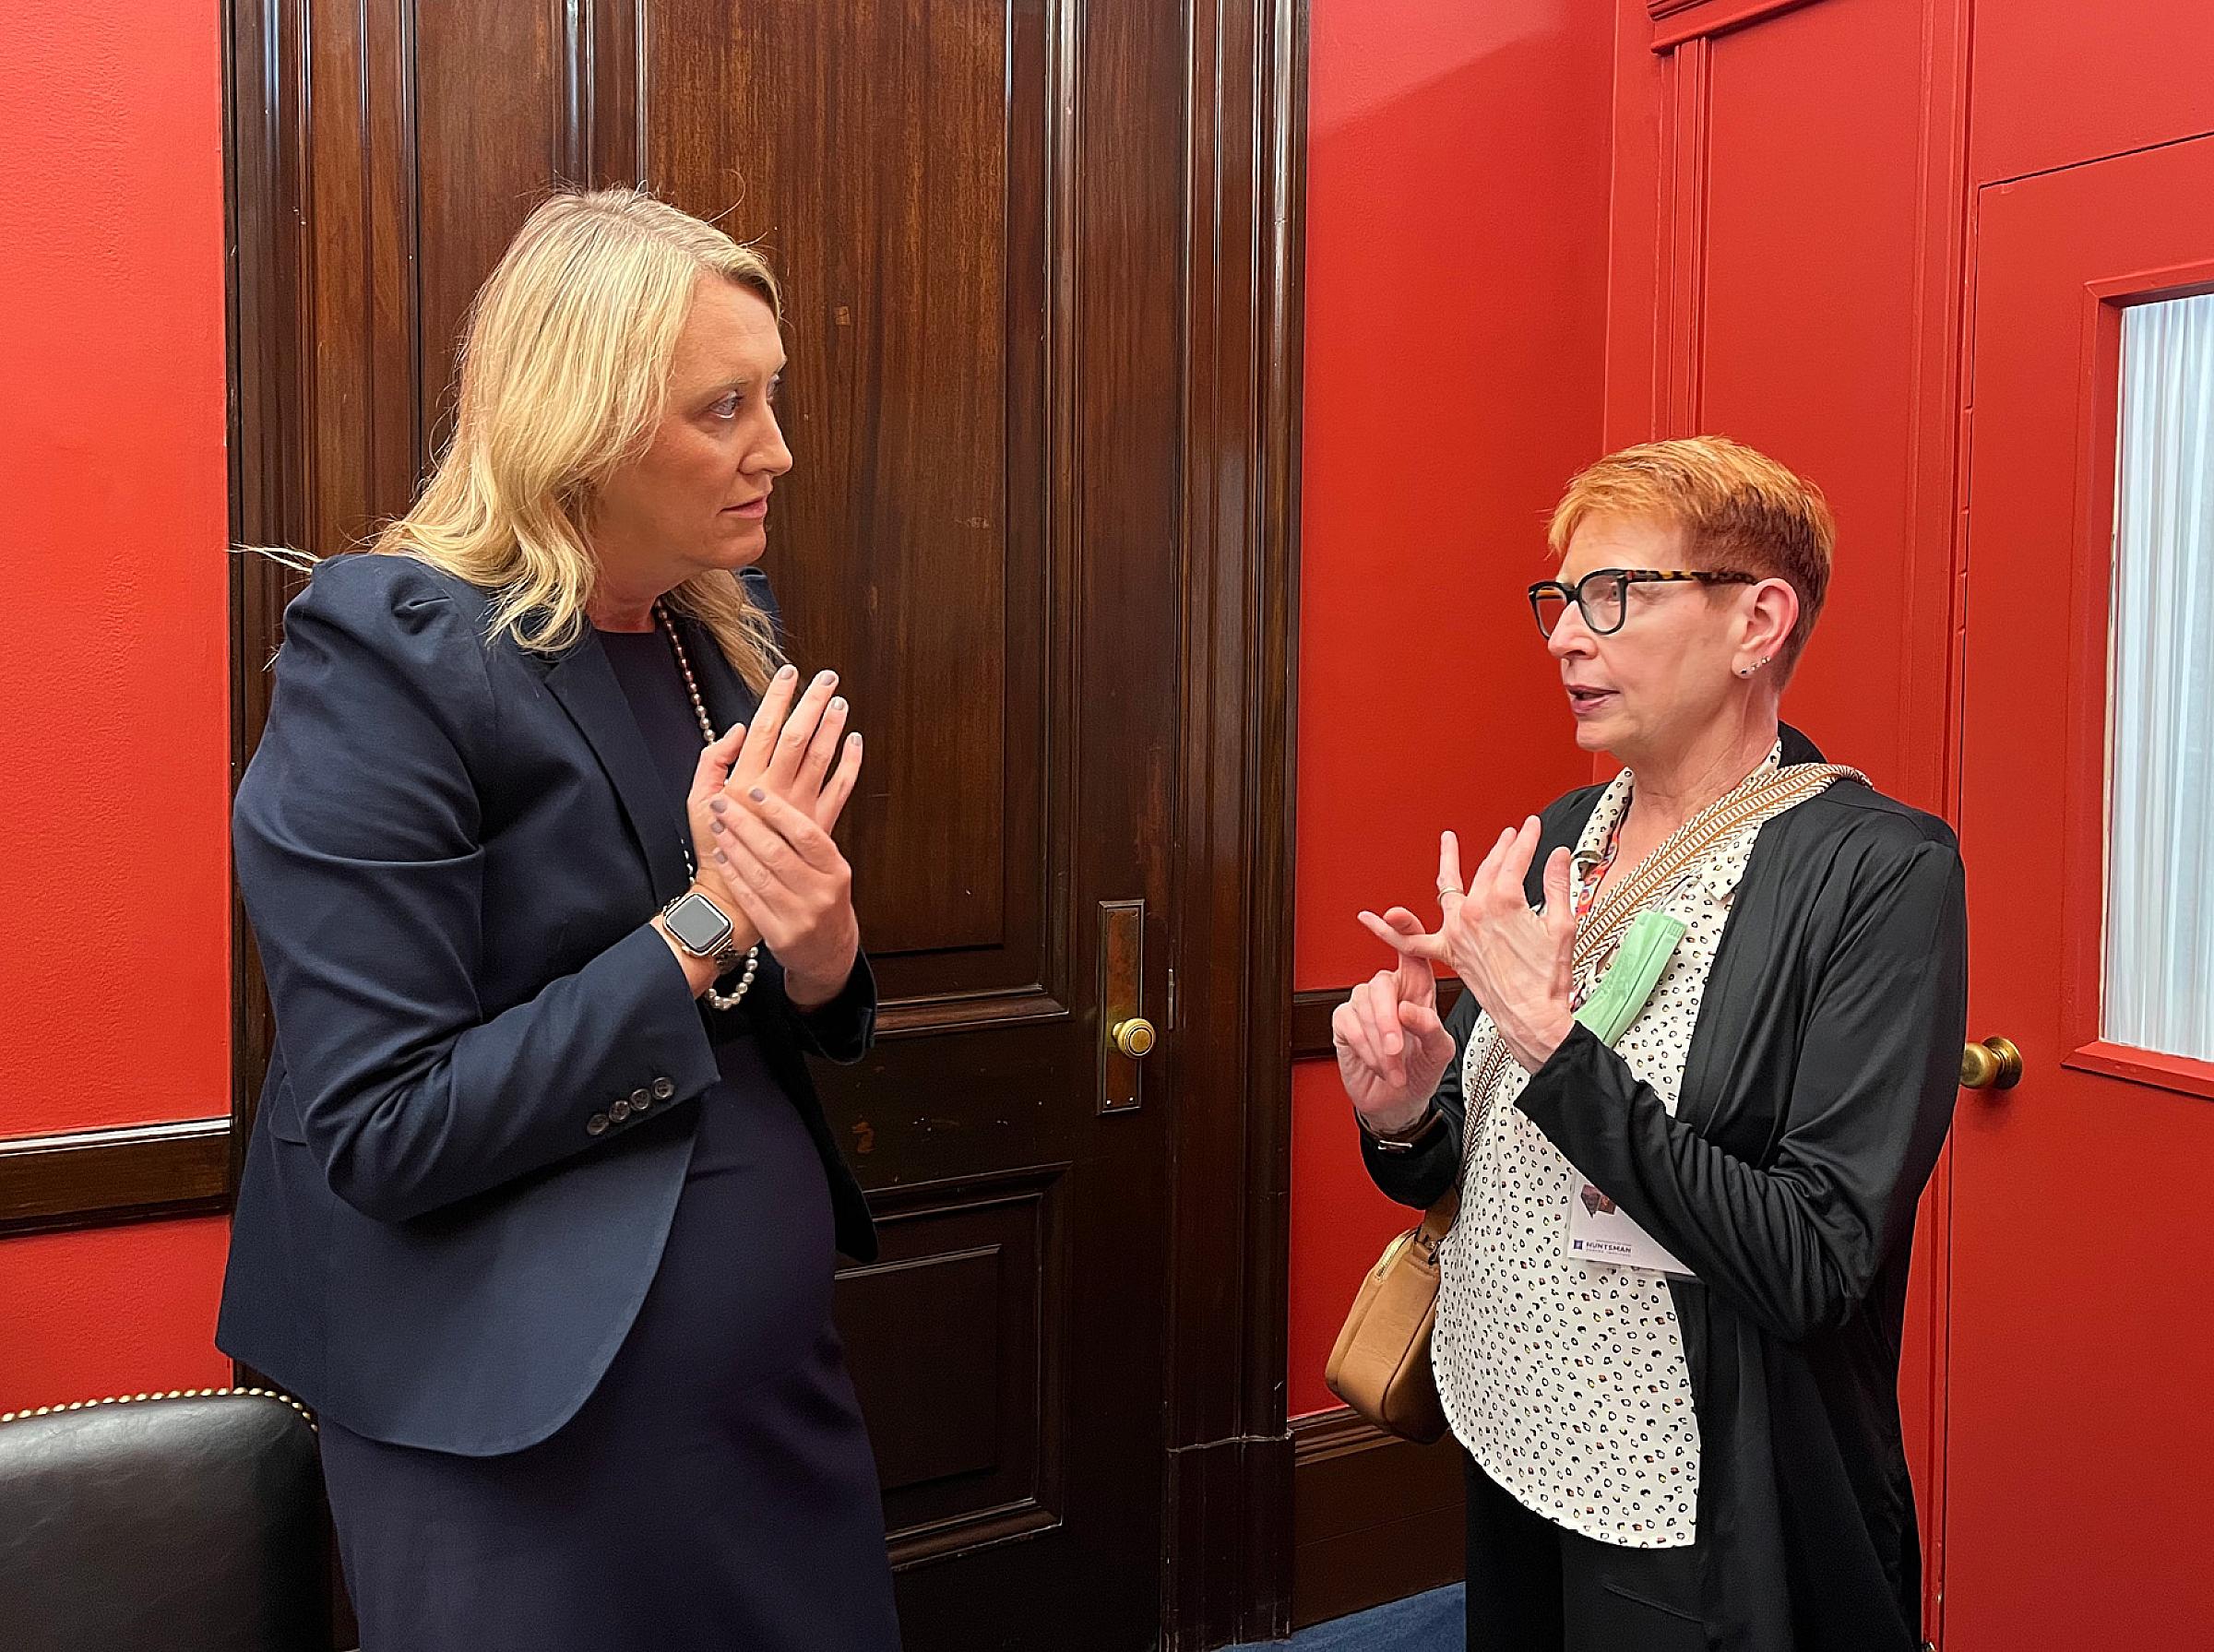 Diana Wiig, former Sweetwater Regional Cancer Center patient, converses with Senator Lummis's (WY) legislative assistant Linnea Melbye.